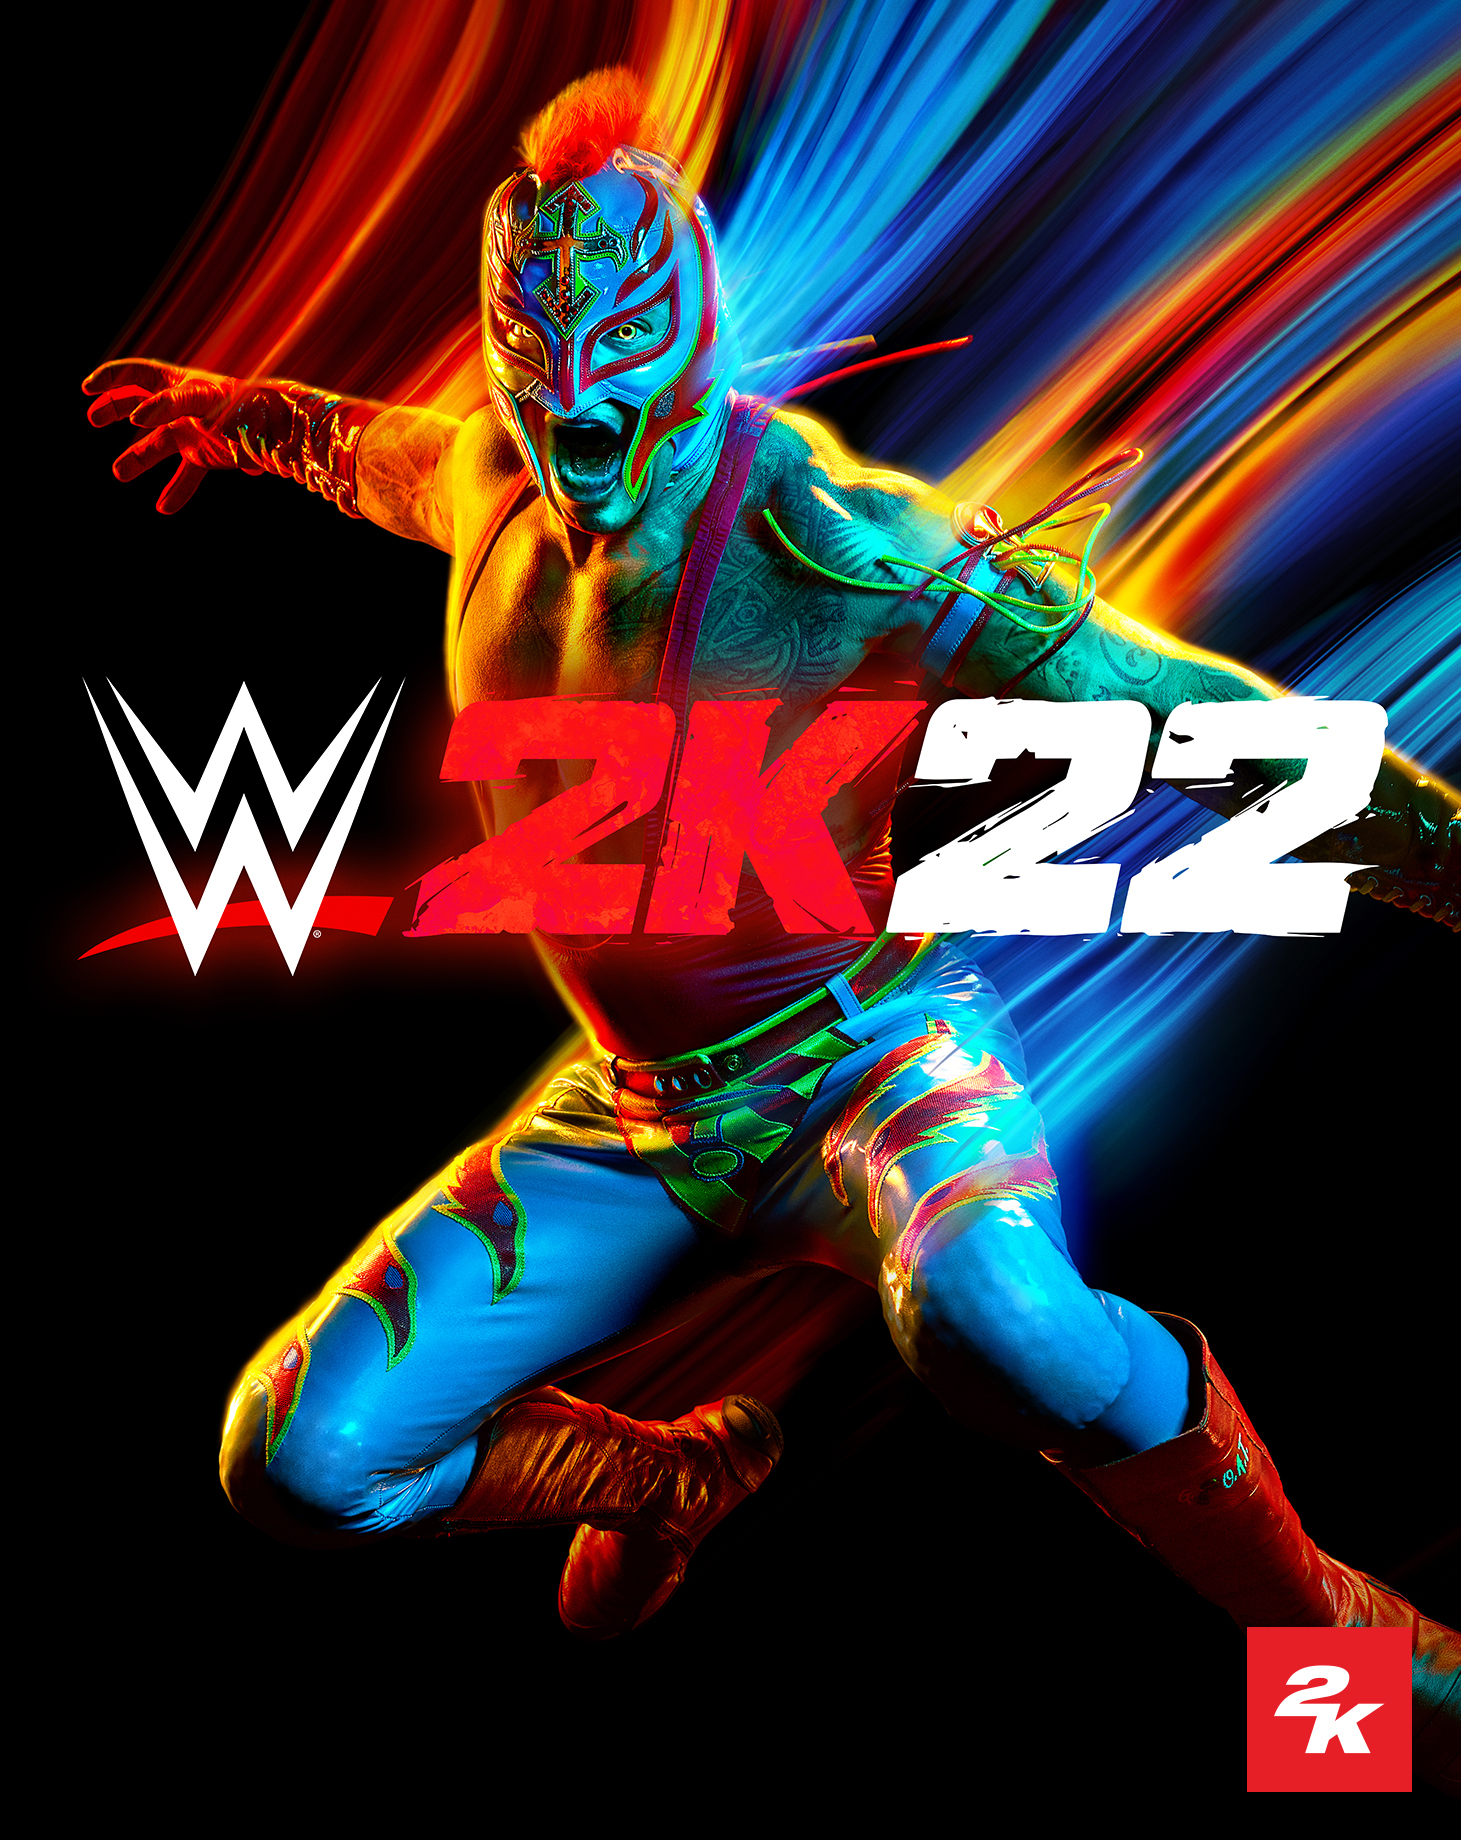 El Mago Jr  WWE 2K20 Roster